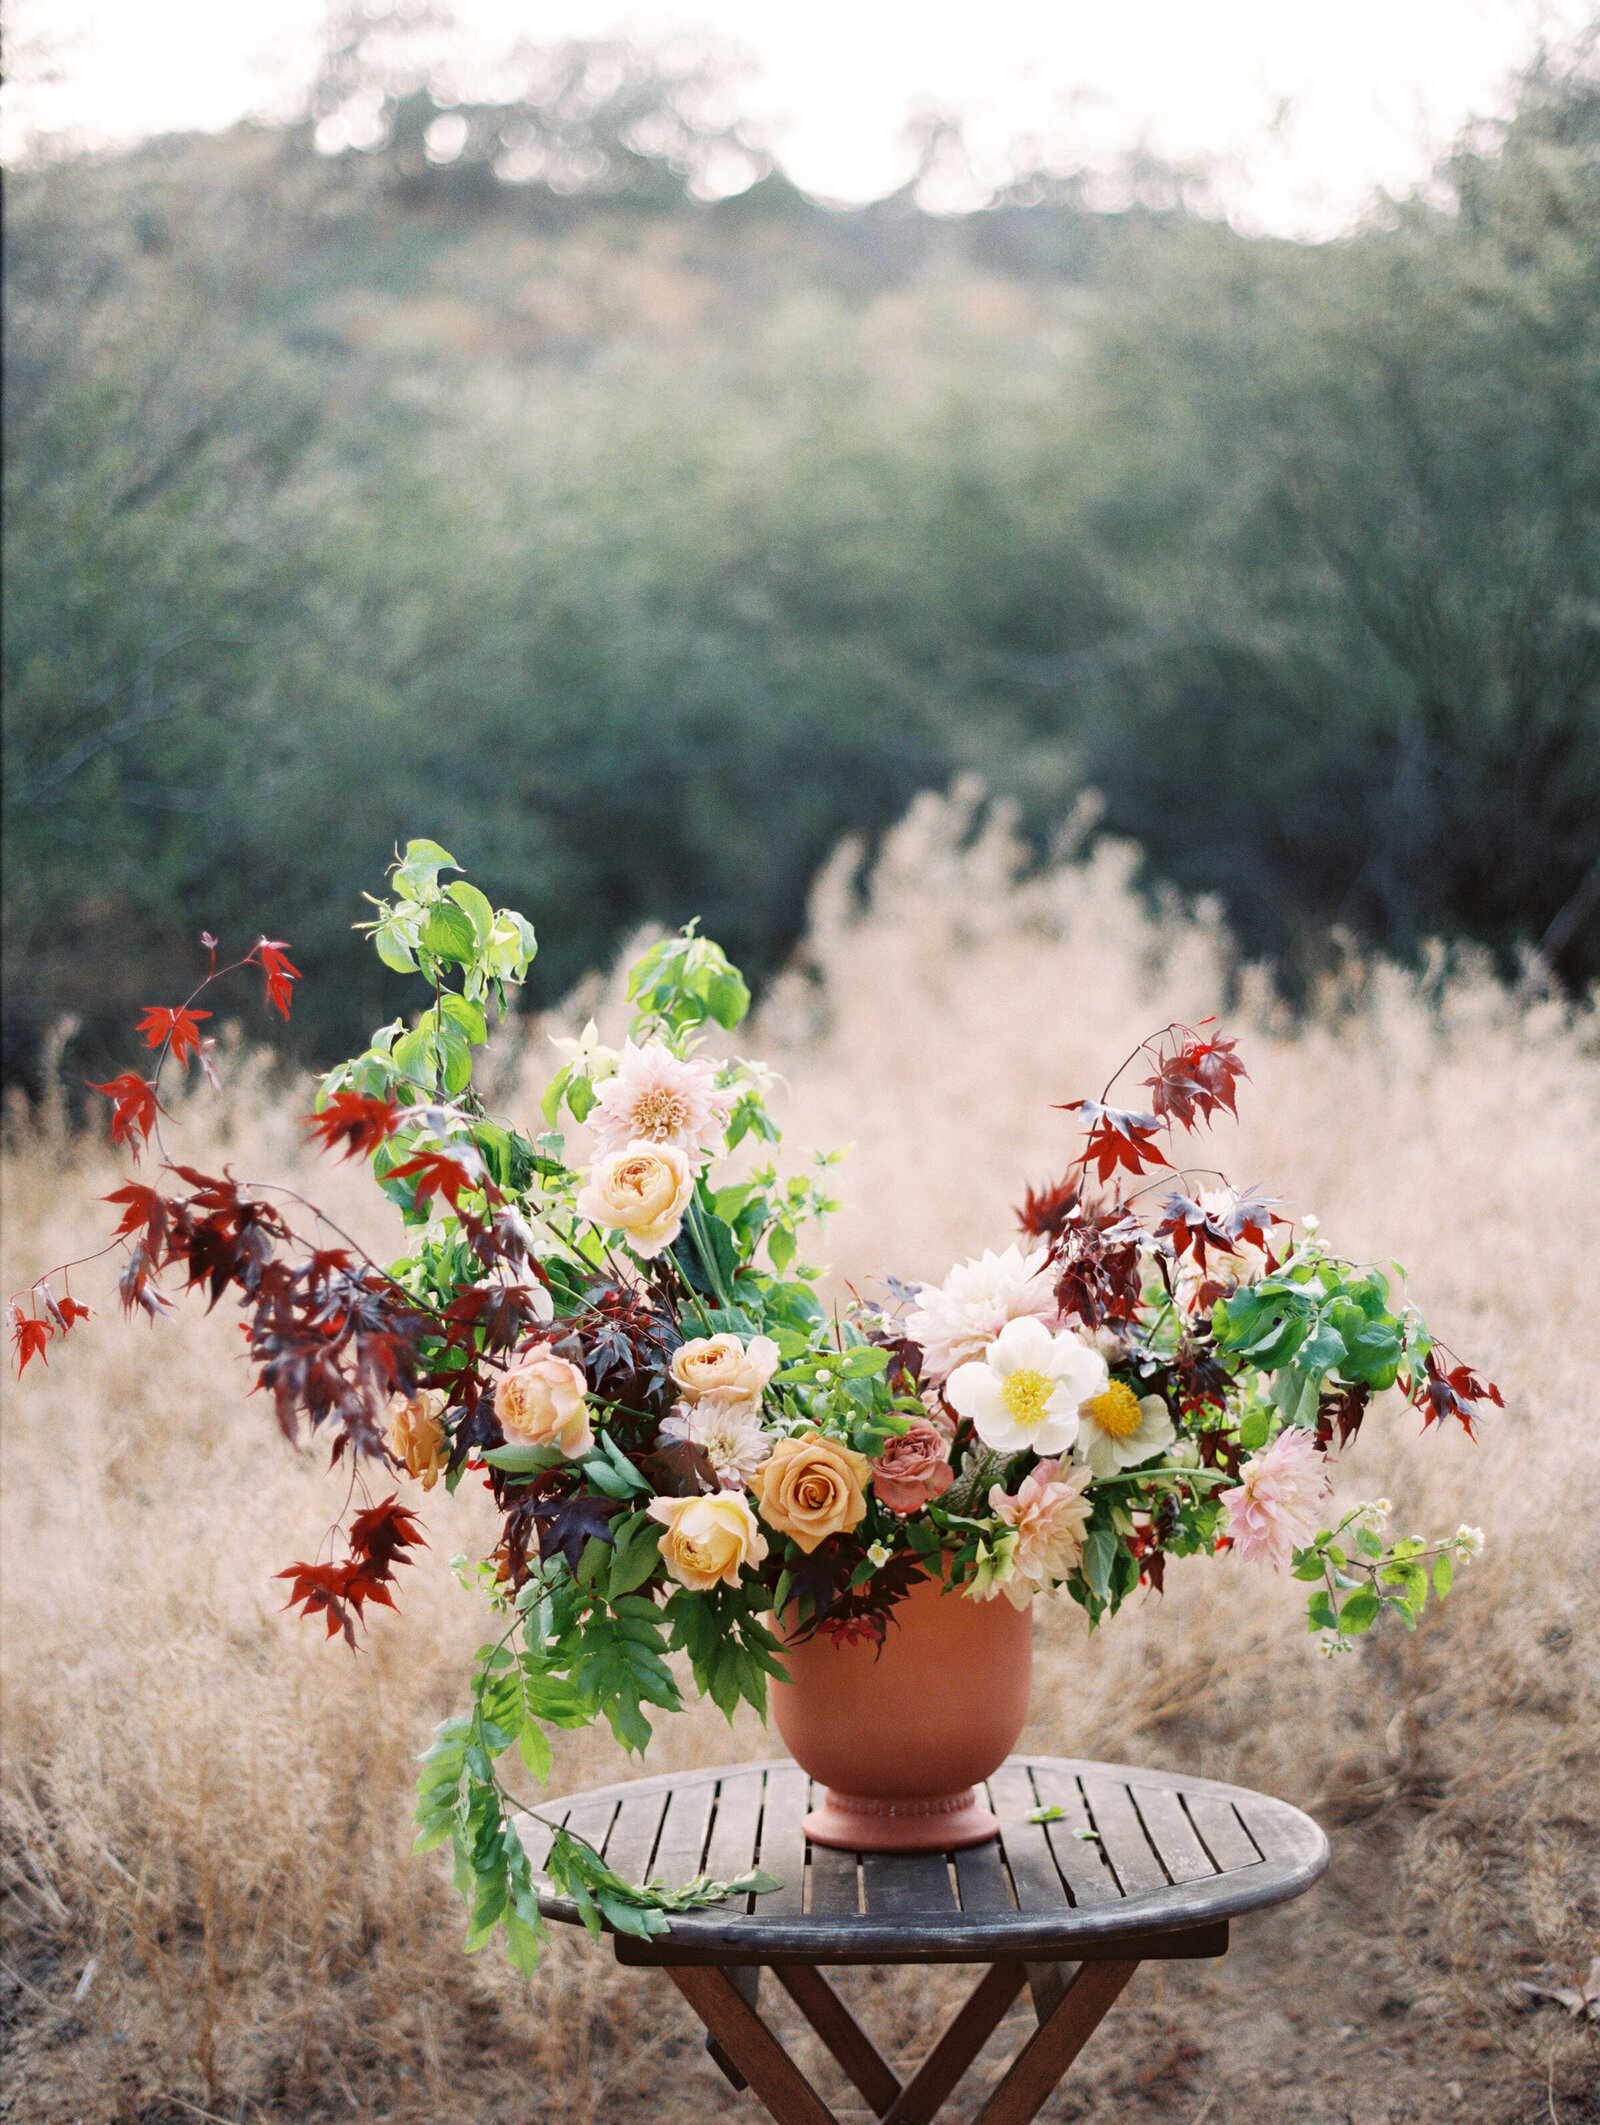 max-owens-design-at-home-floral-arrangements-20-outdoor-flowers